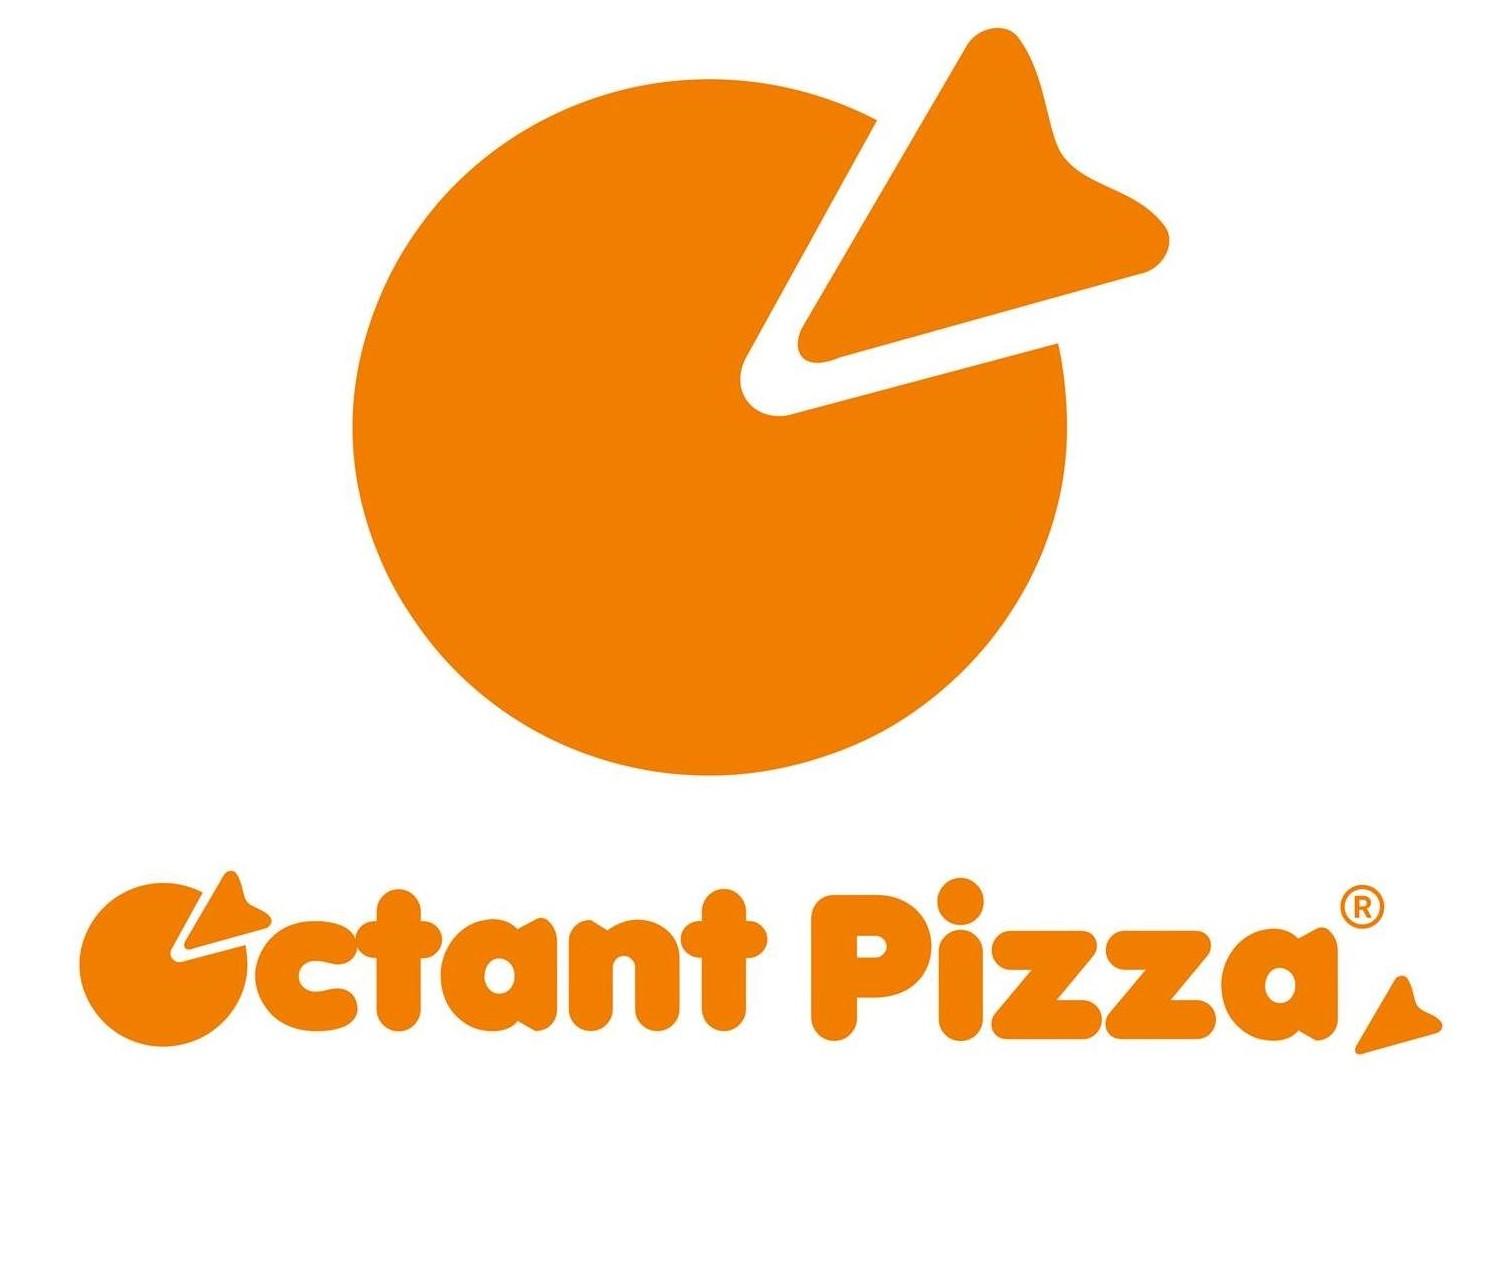 Octant Pizza - C G Road